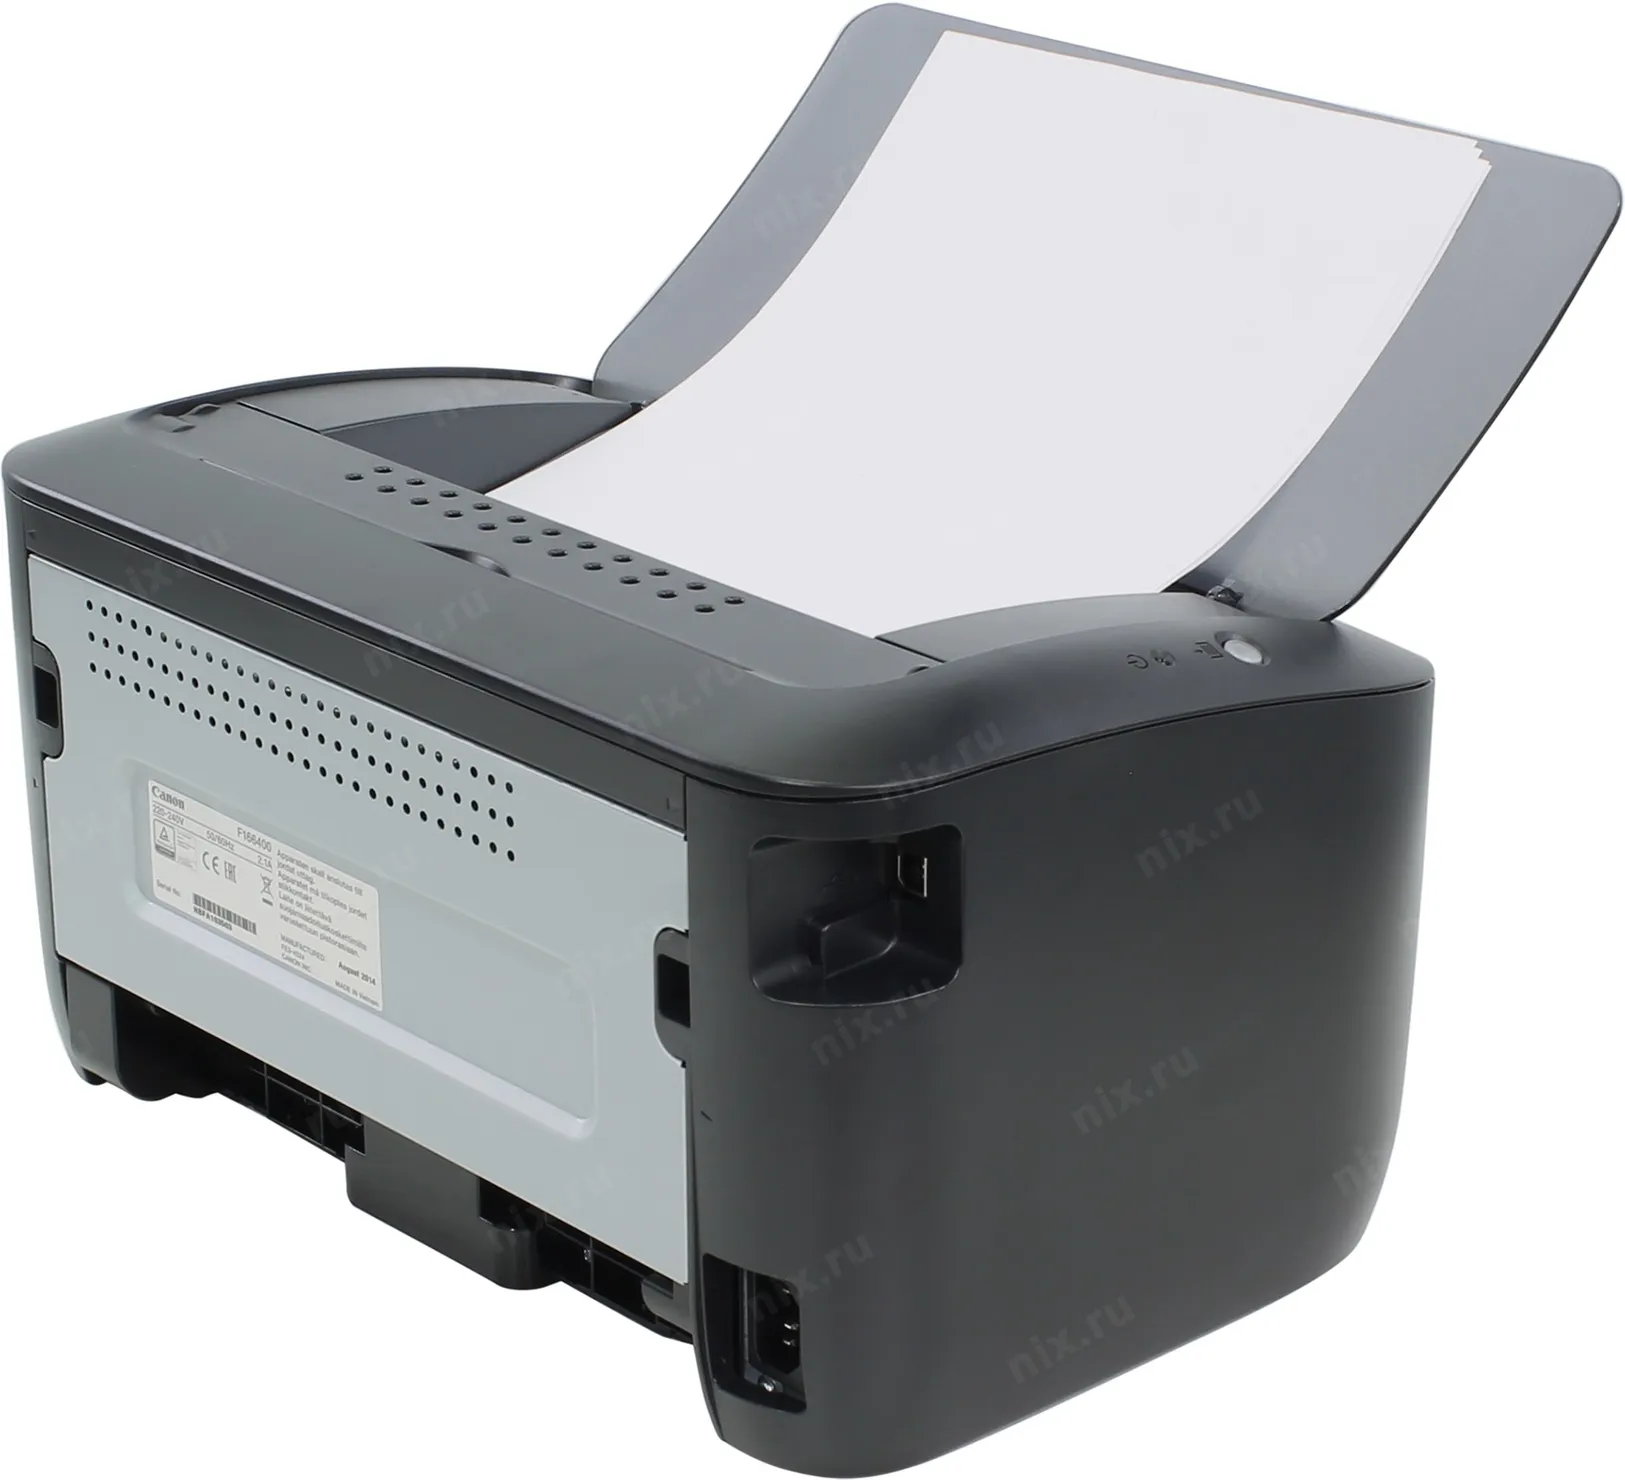 Принтер Canon i-SENSYS LBP6030w (A4, 18 стр / мин, 32Mb, 2400dpi, USB2.0, WiFi, лазерный)#5